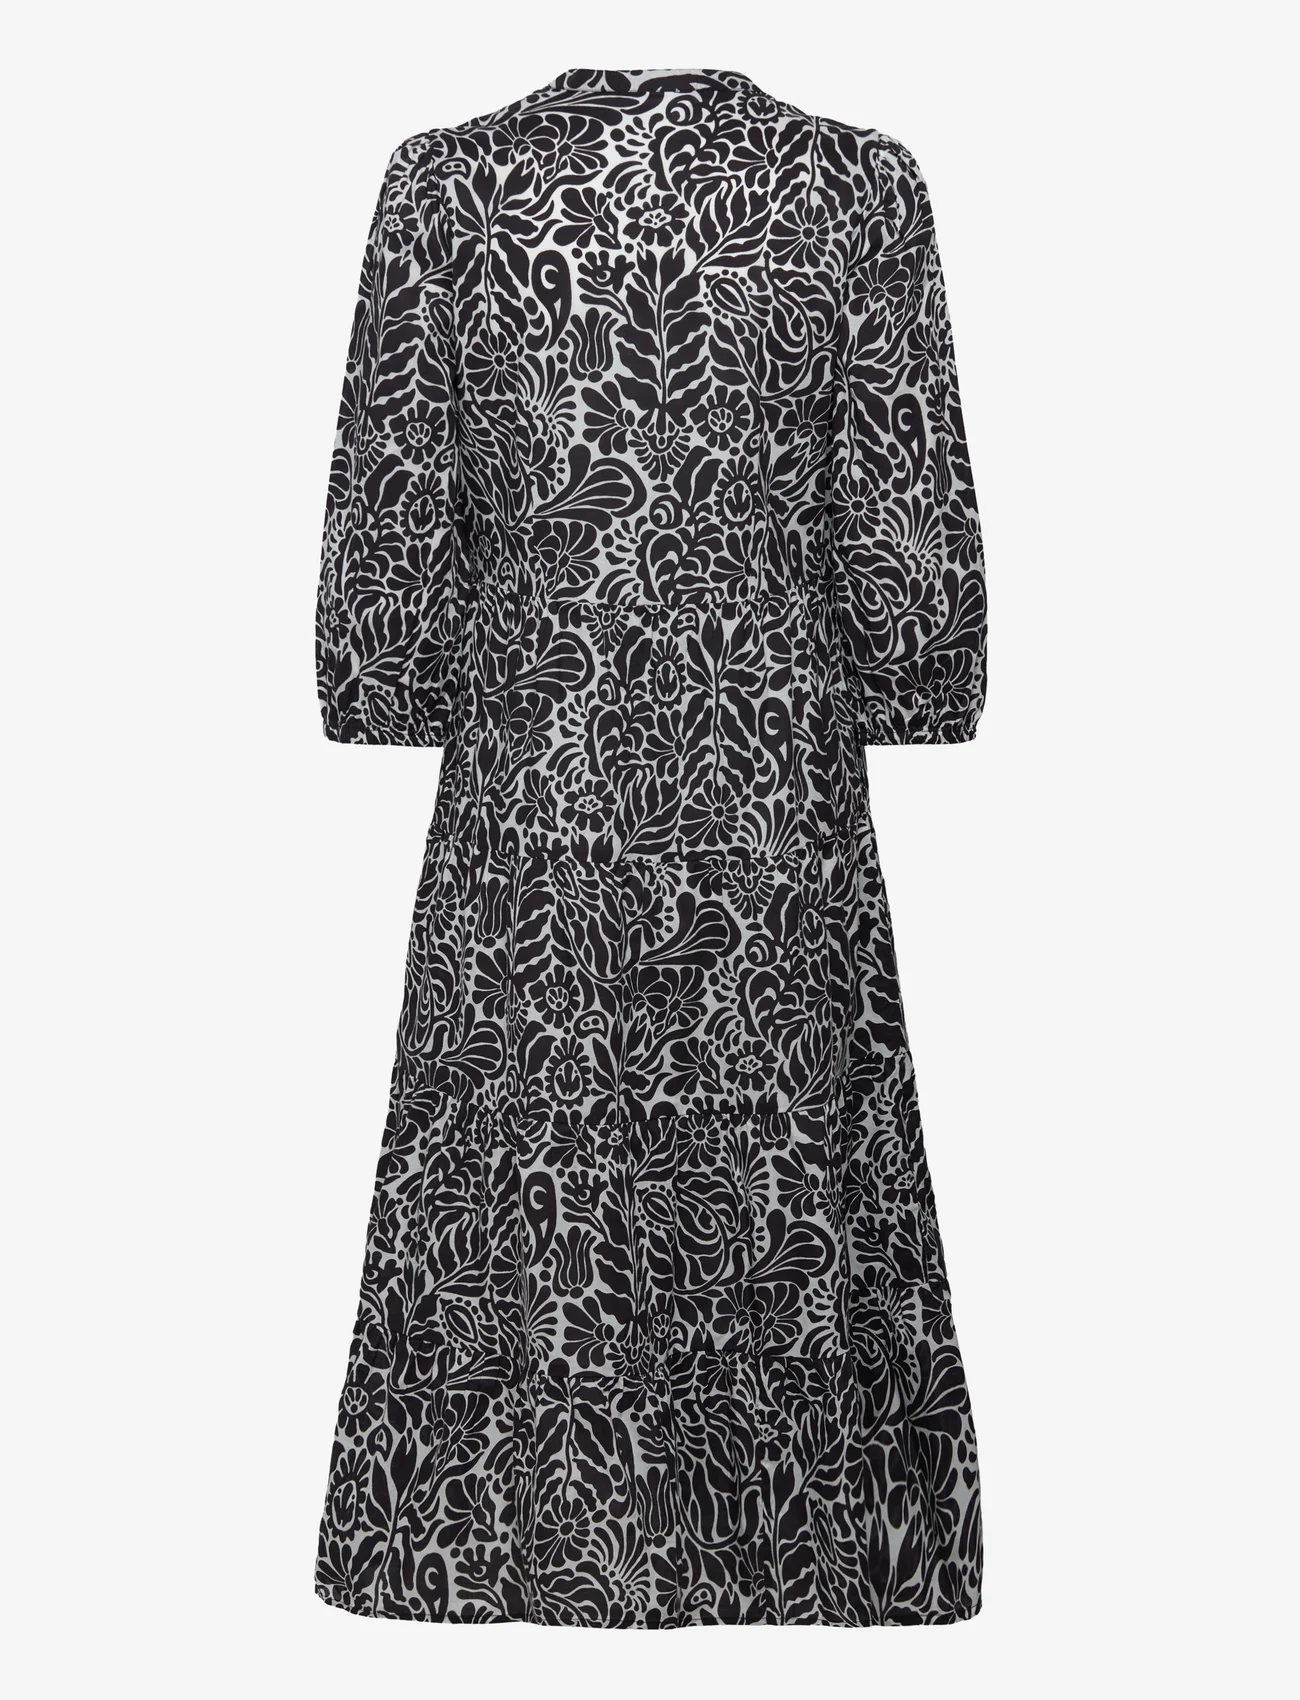 Noa Noa - AnnieNN Dress - sukienki koszulowe - print black/white - 1